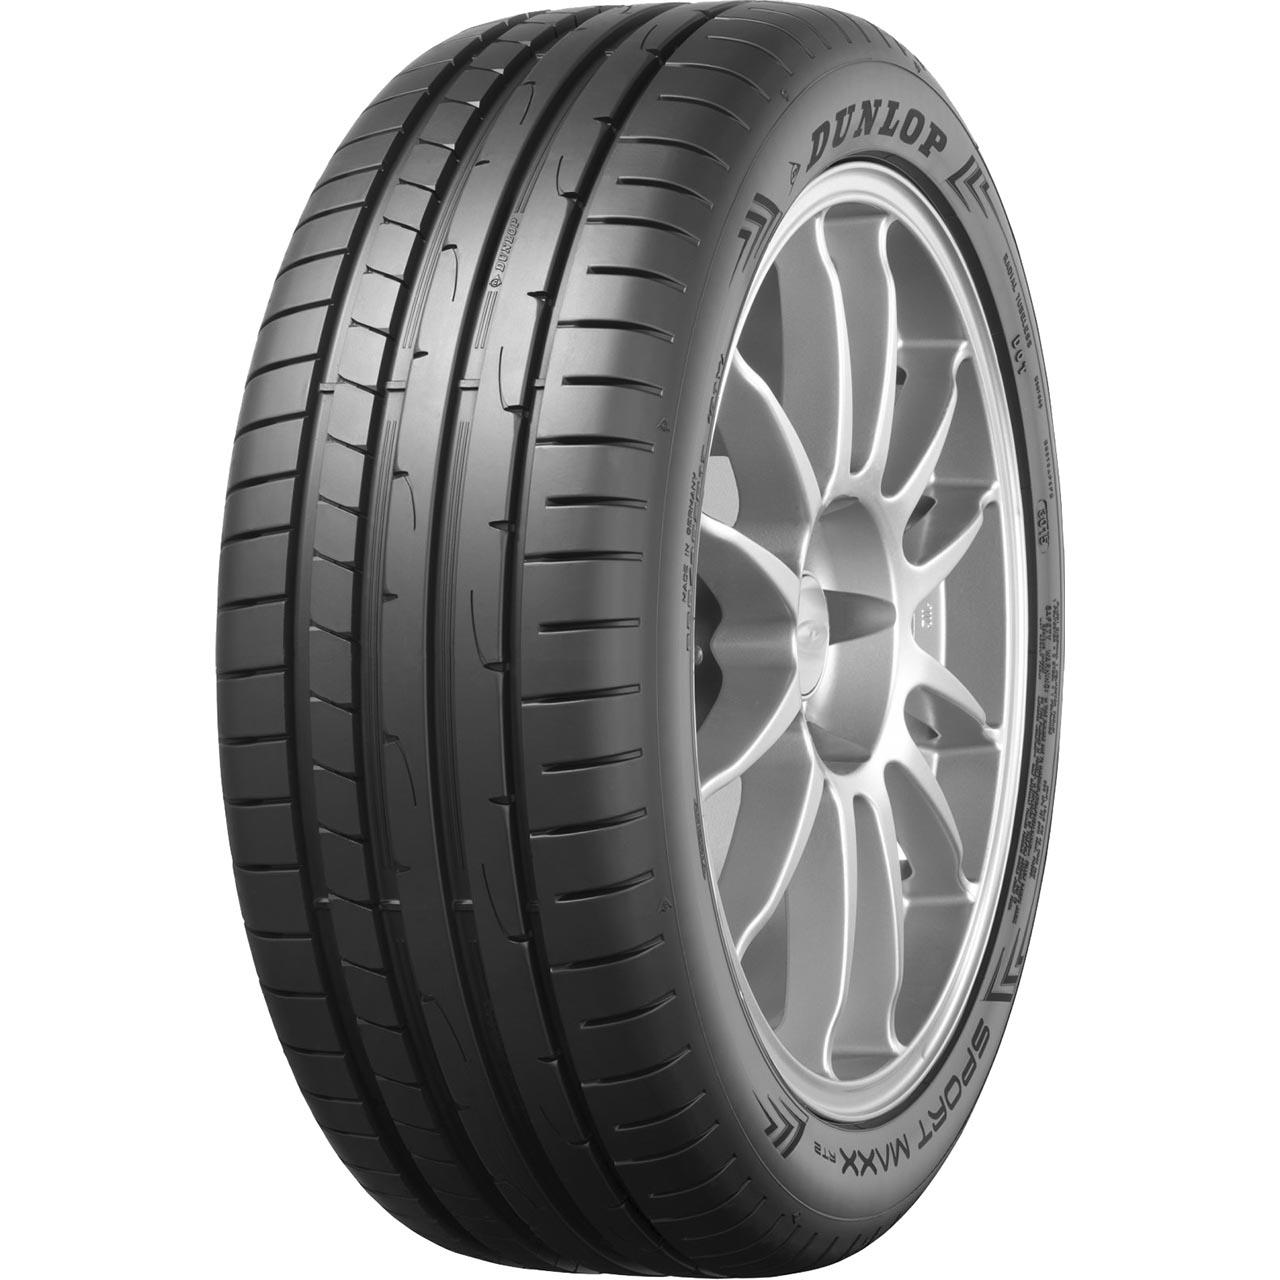 Gomme Nuove Dunlop 235/45 R17 94Y SP.MAXX RT2 MFS pneumatici nuovi Estivo